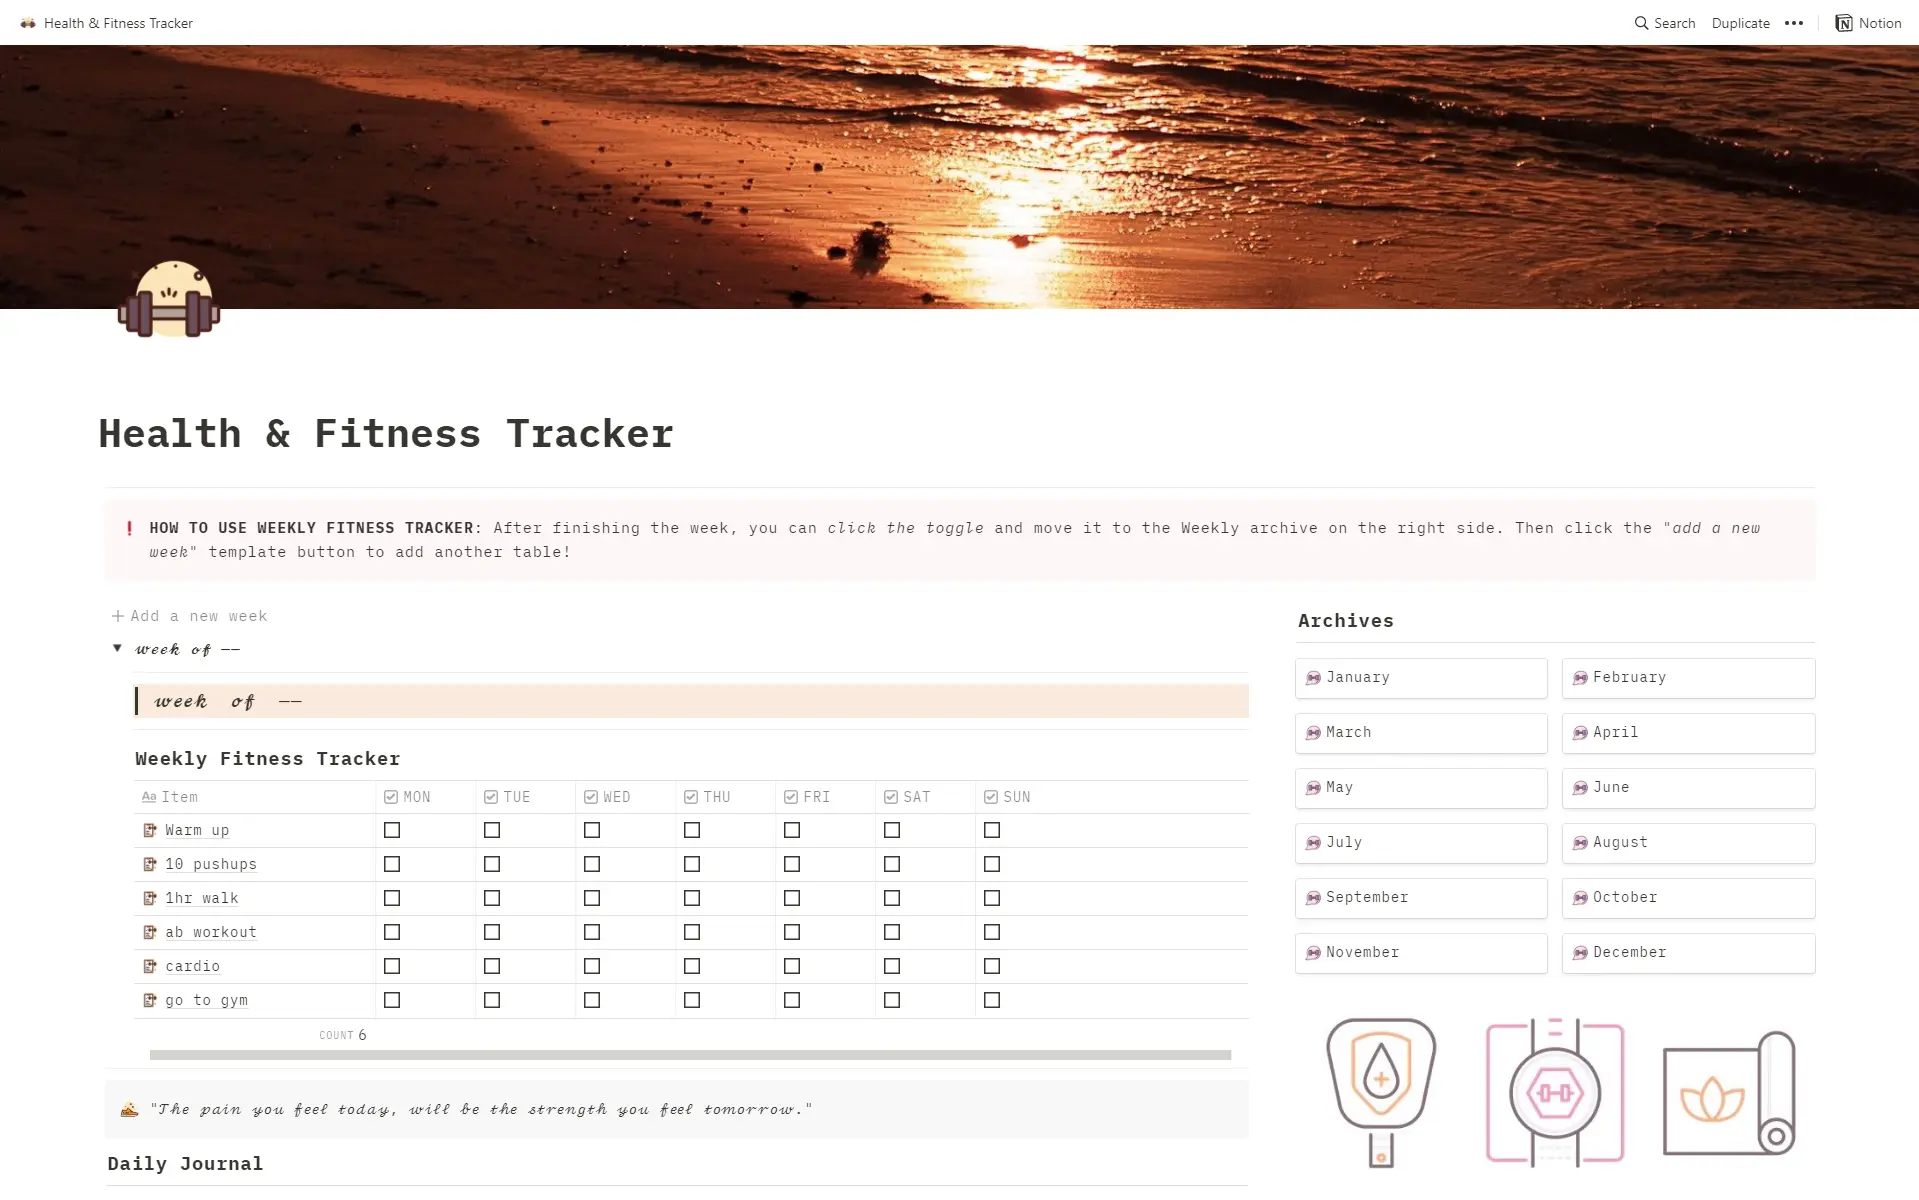 Health Fitness Tracker image